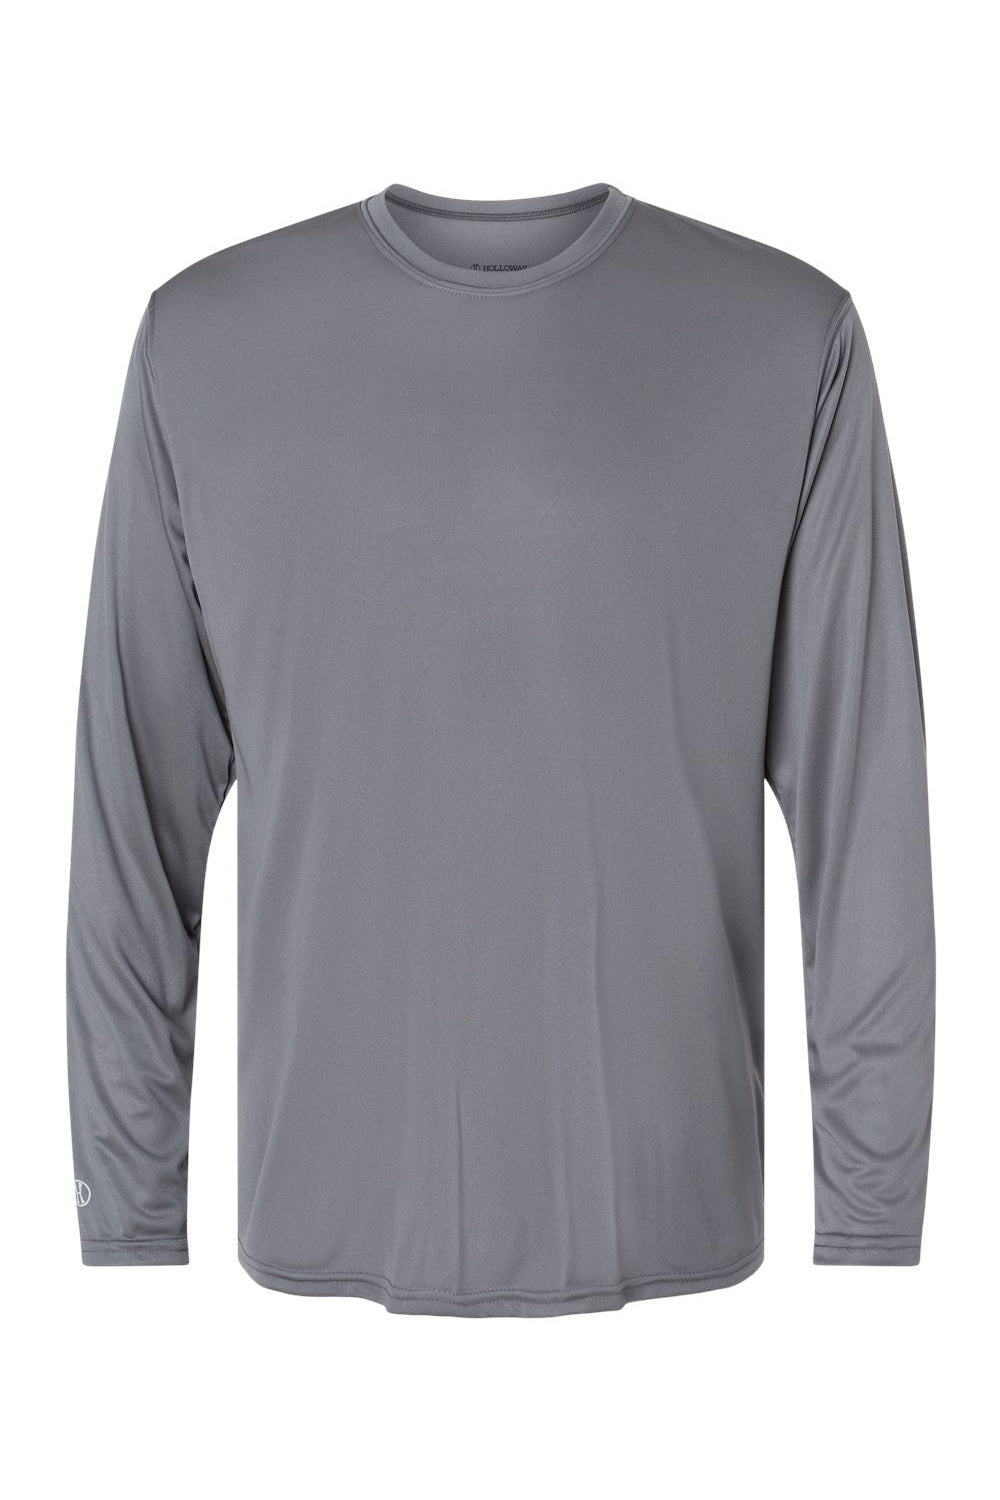 Holloway 222822 Mens Momentum Long Sleeve Crewneck T-Shirt Graphite Grey Flat Front